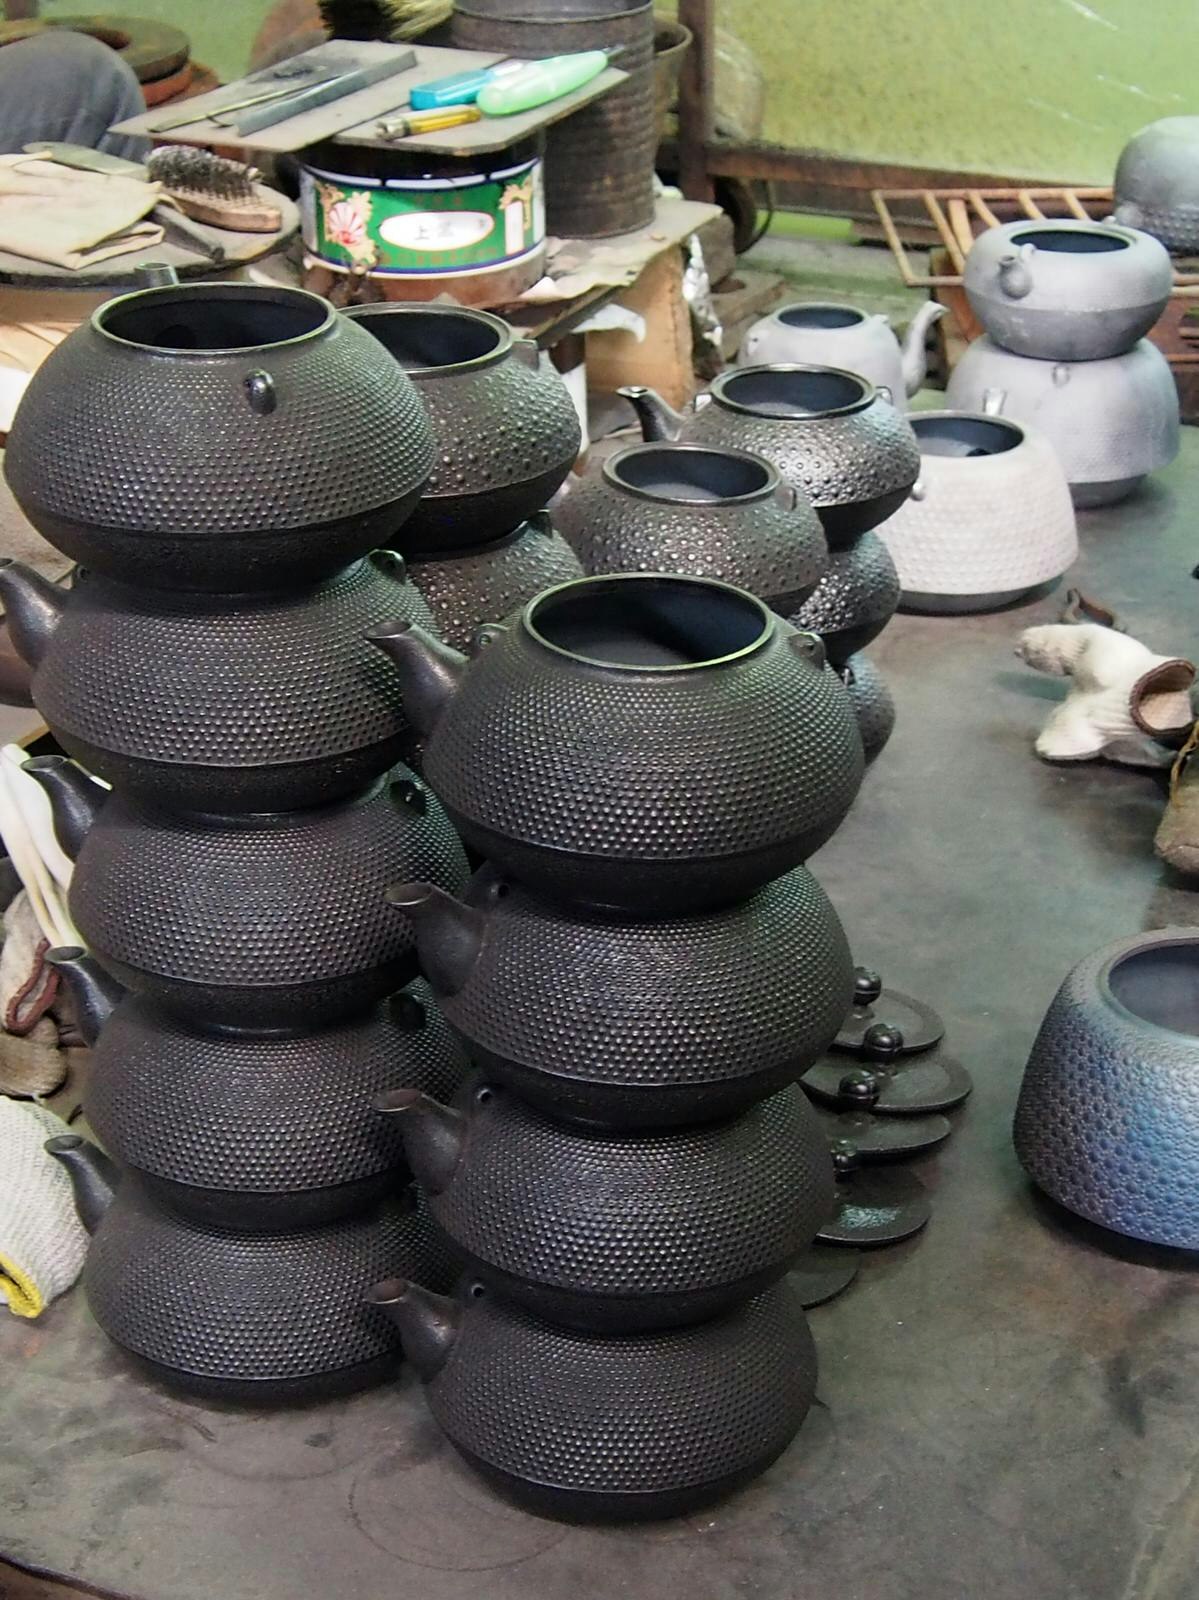 Stacks of cast-iron pots in the Iwachu workshop © Manami Okazaki / Lonely Planet